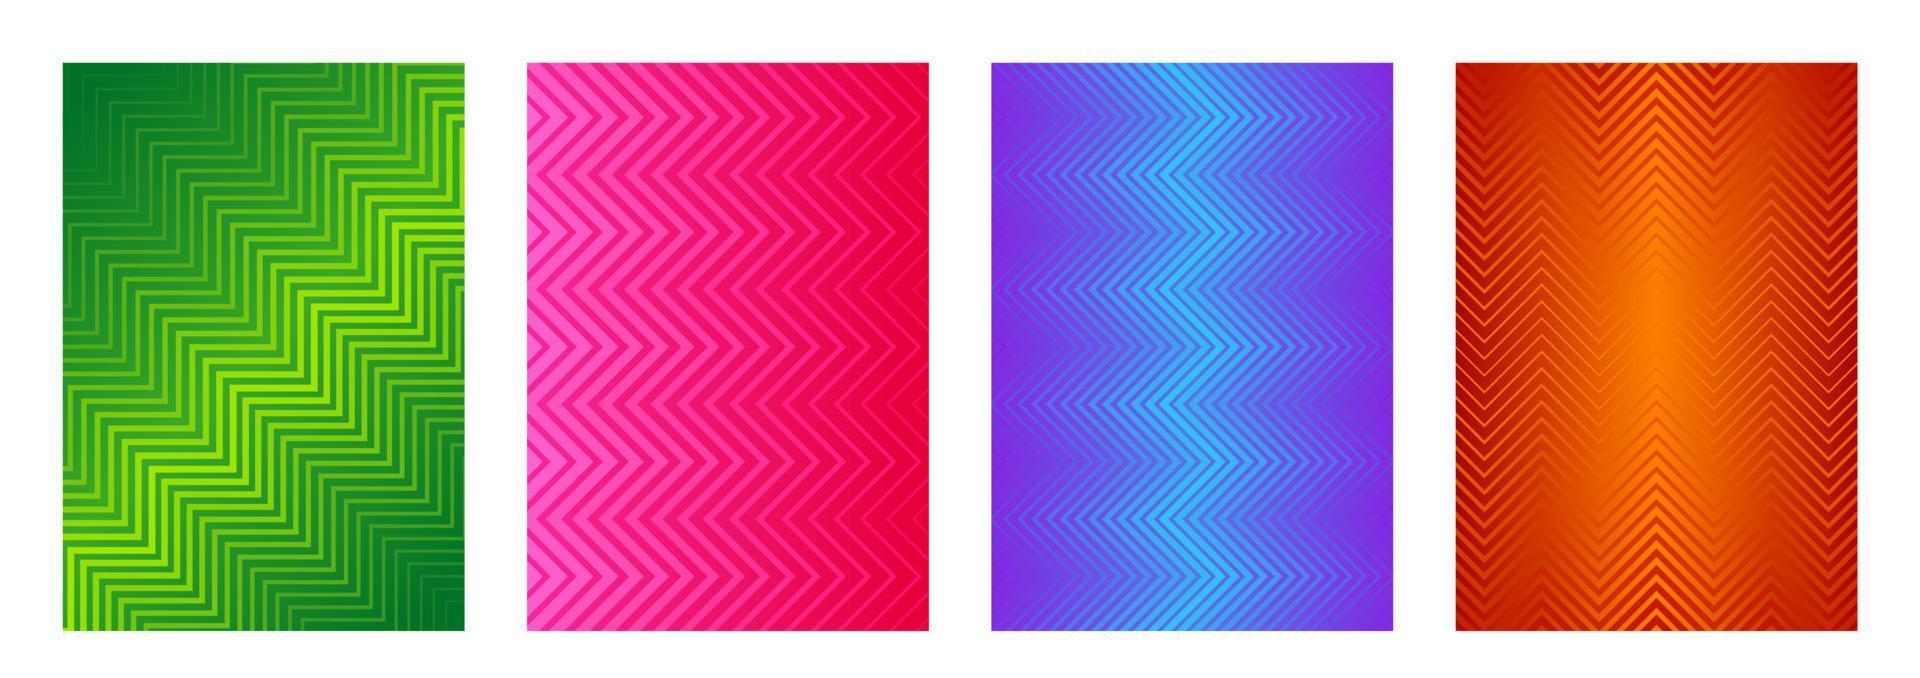 Zigzag Line Background Design Collection vector